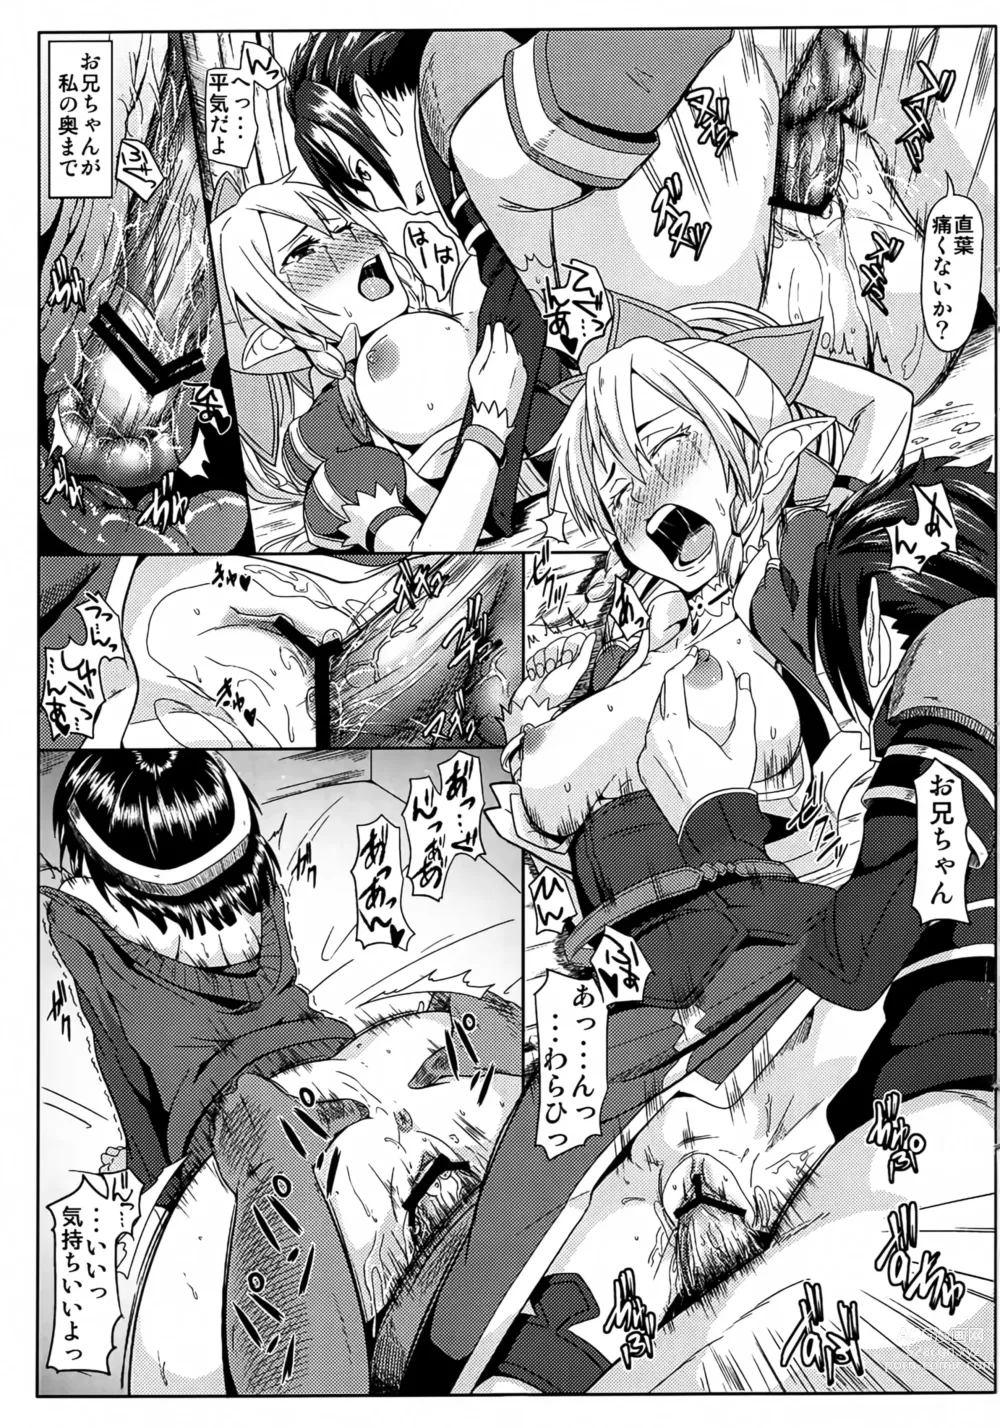 Page 9 of doujinshi LINK START.